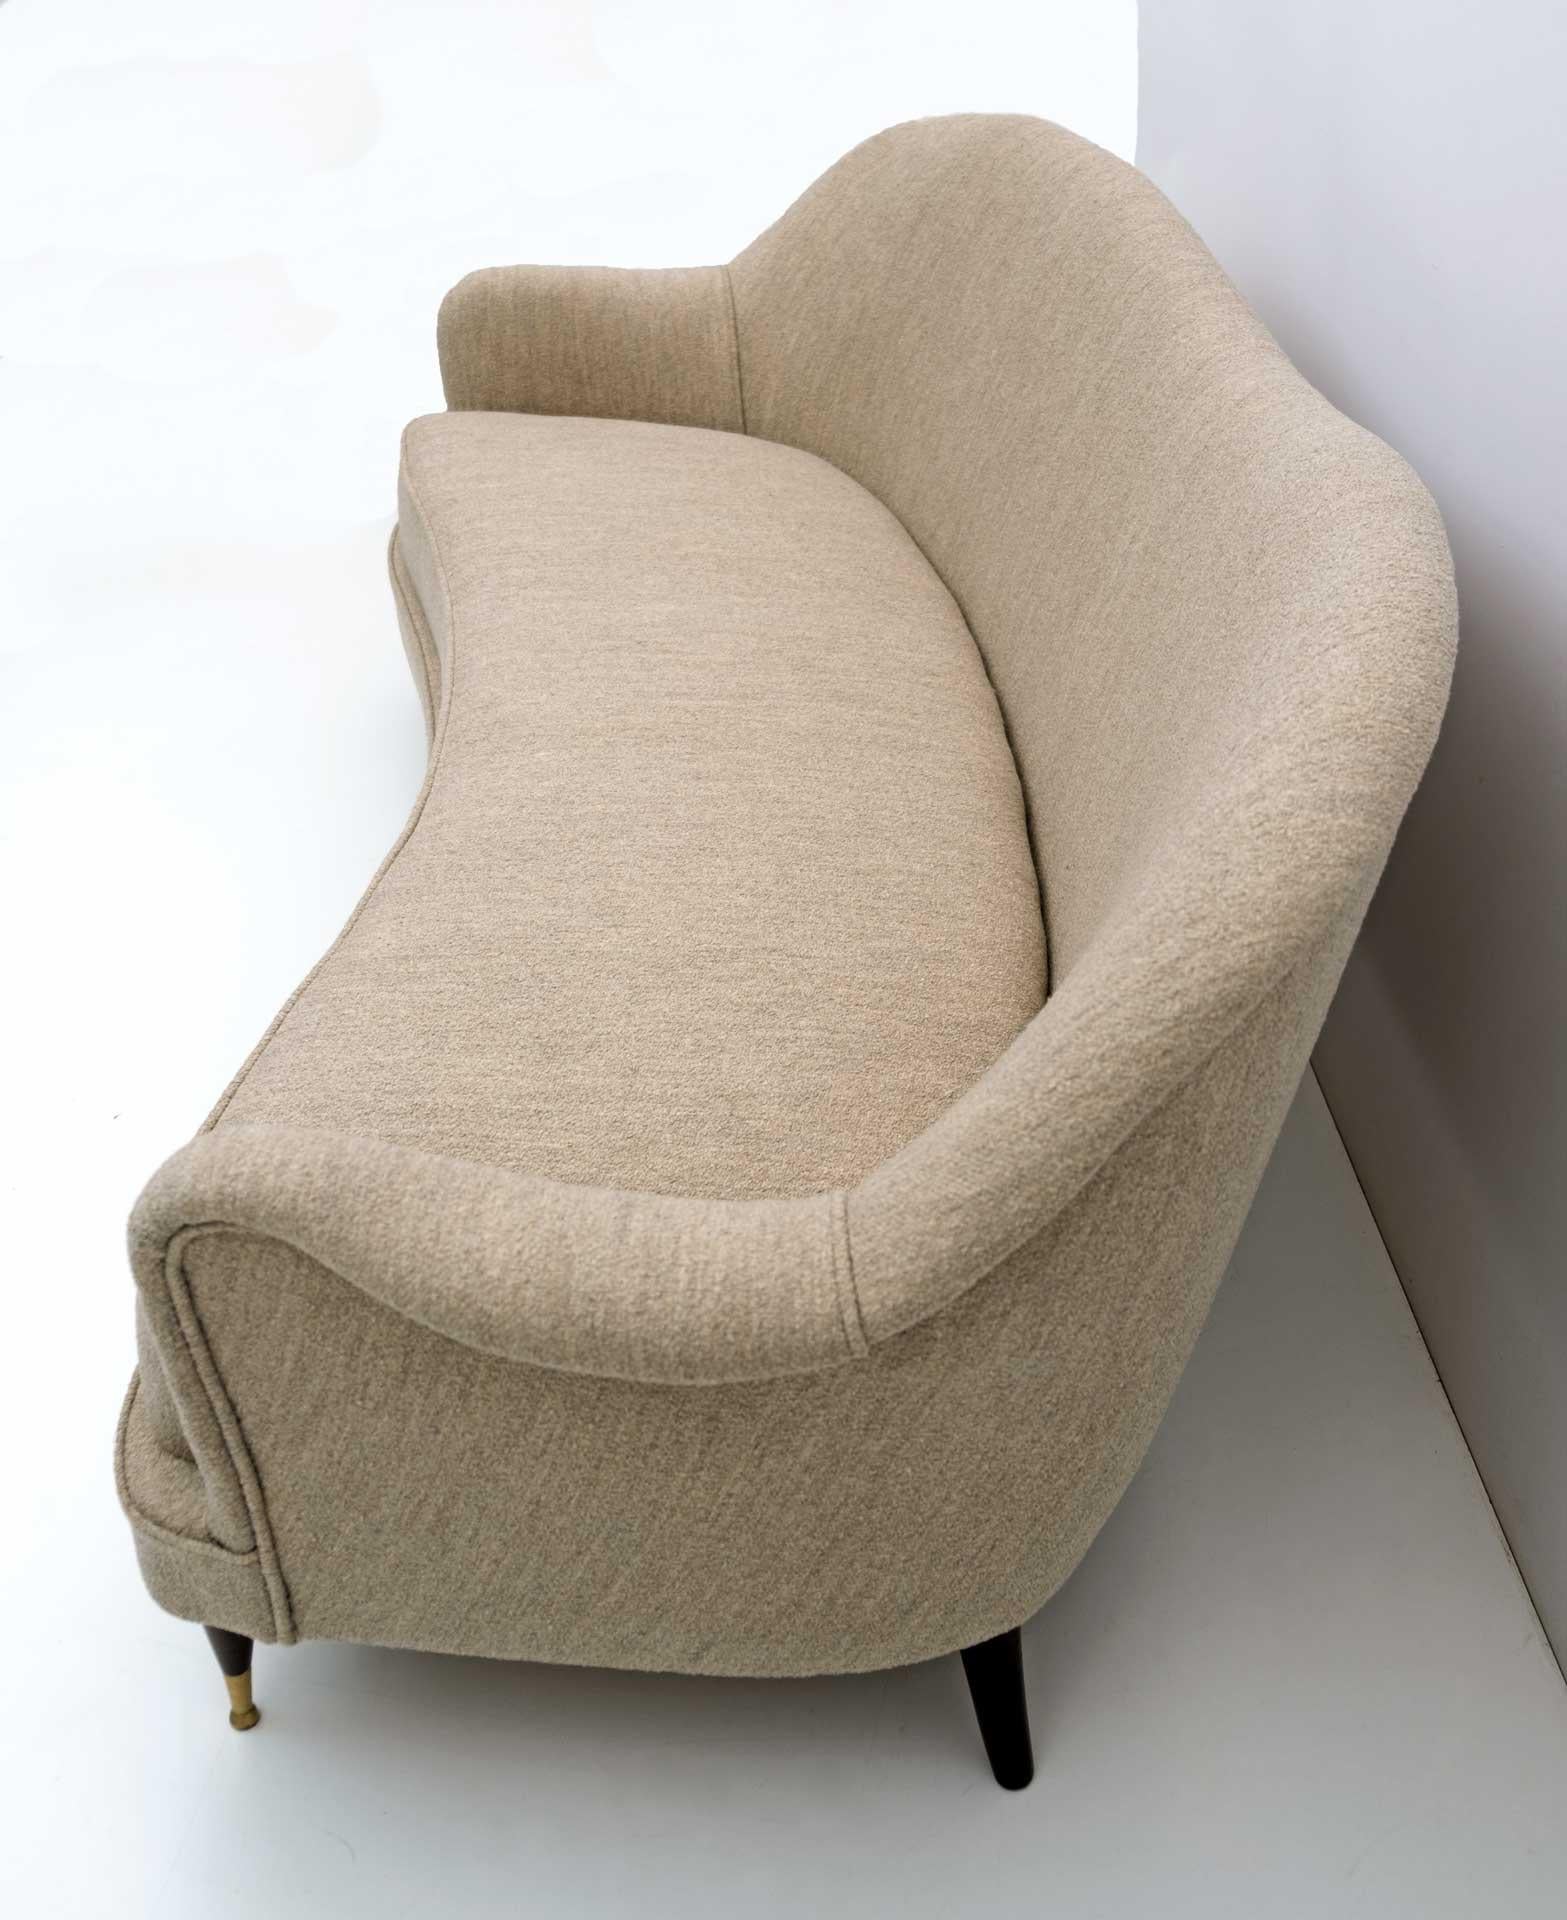 Gio Ponti Style Mid-Century Modern Italian Sofa for Isa Bergamo, 50s For Sale 1